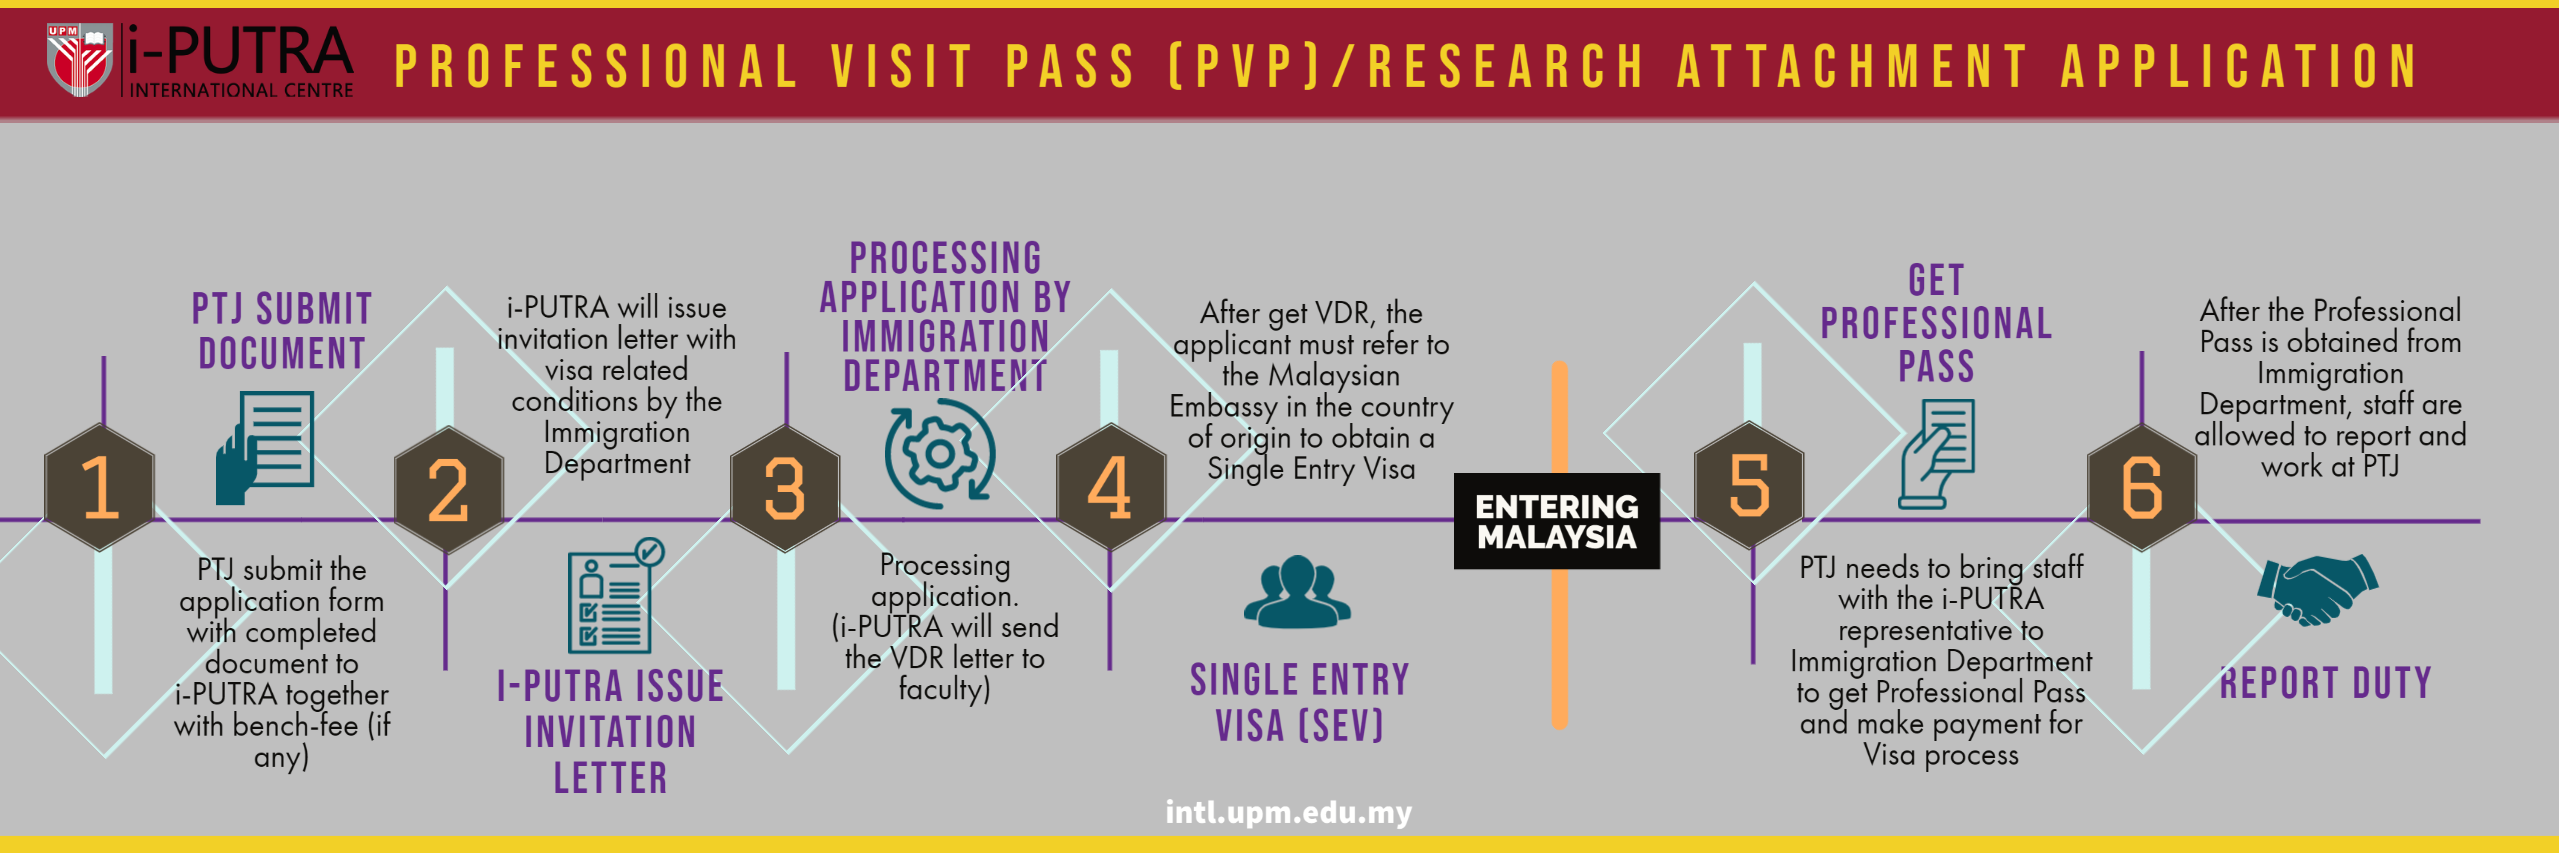 professional visit pass malaysia checklist